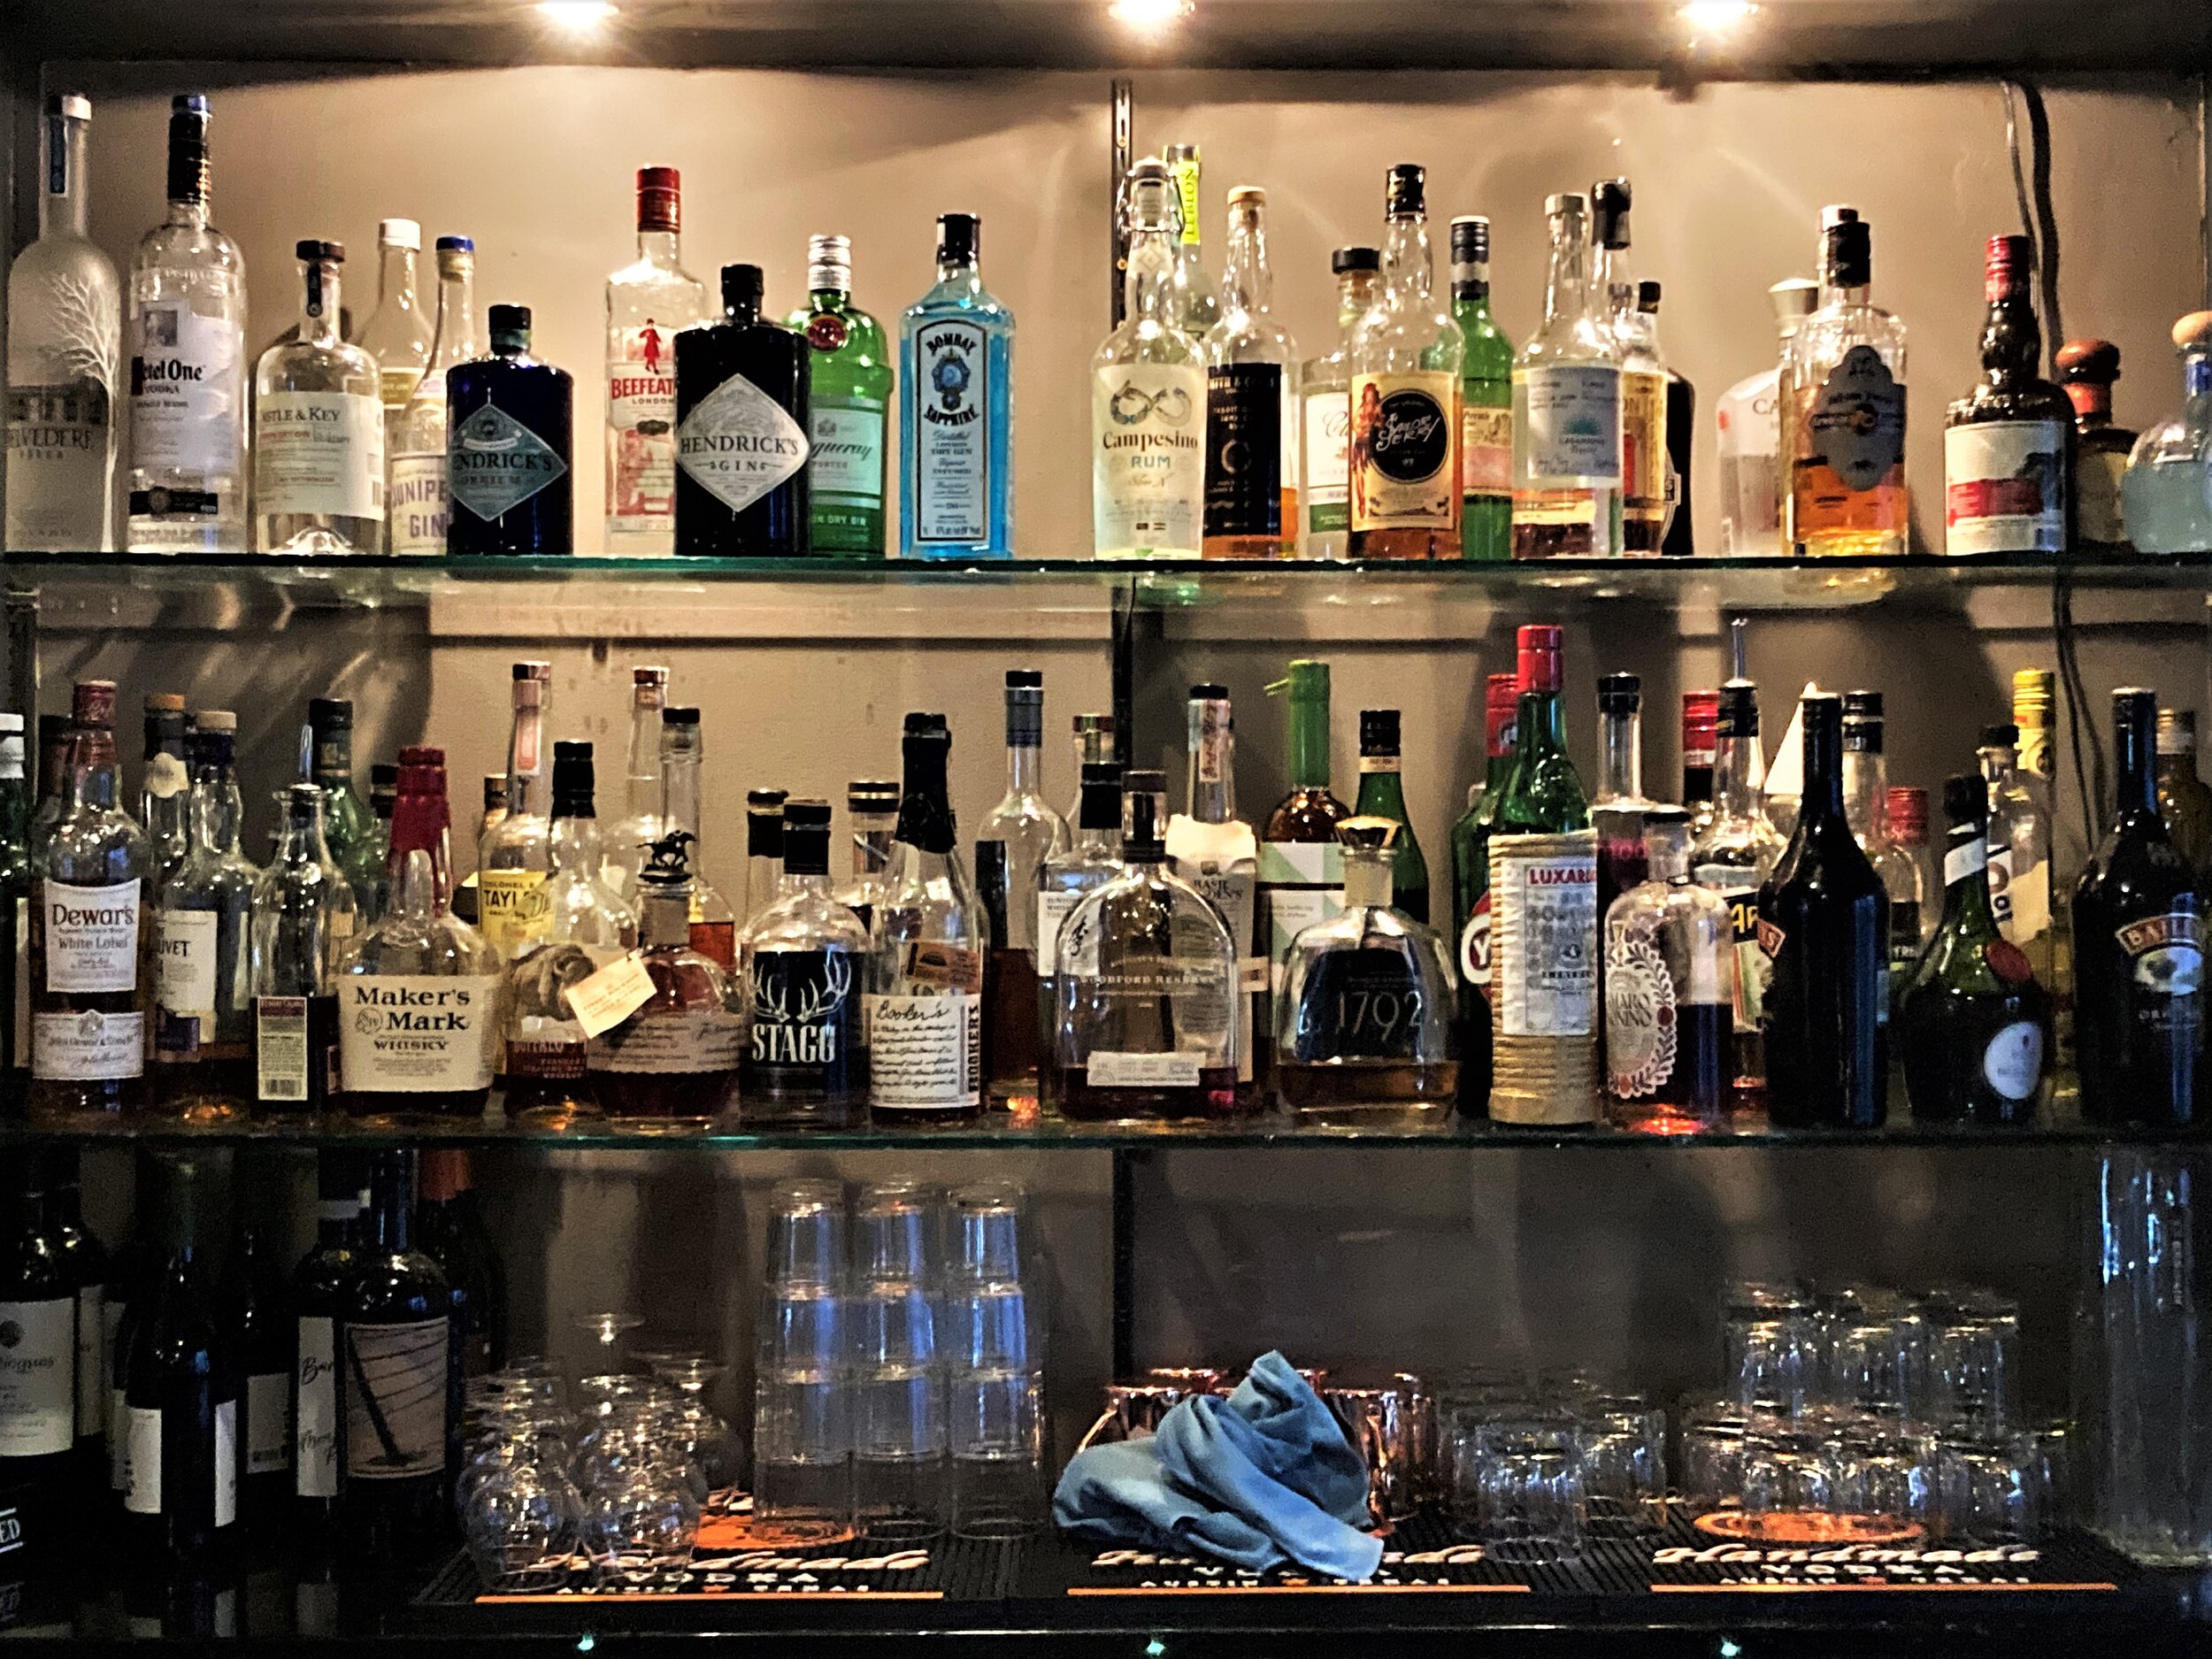 Well stocked bar